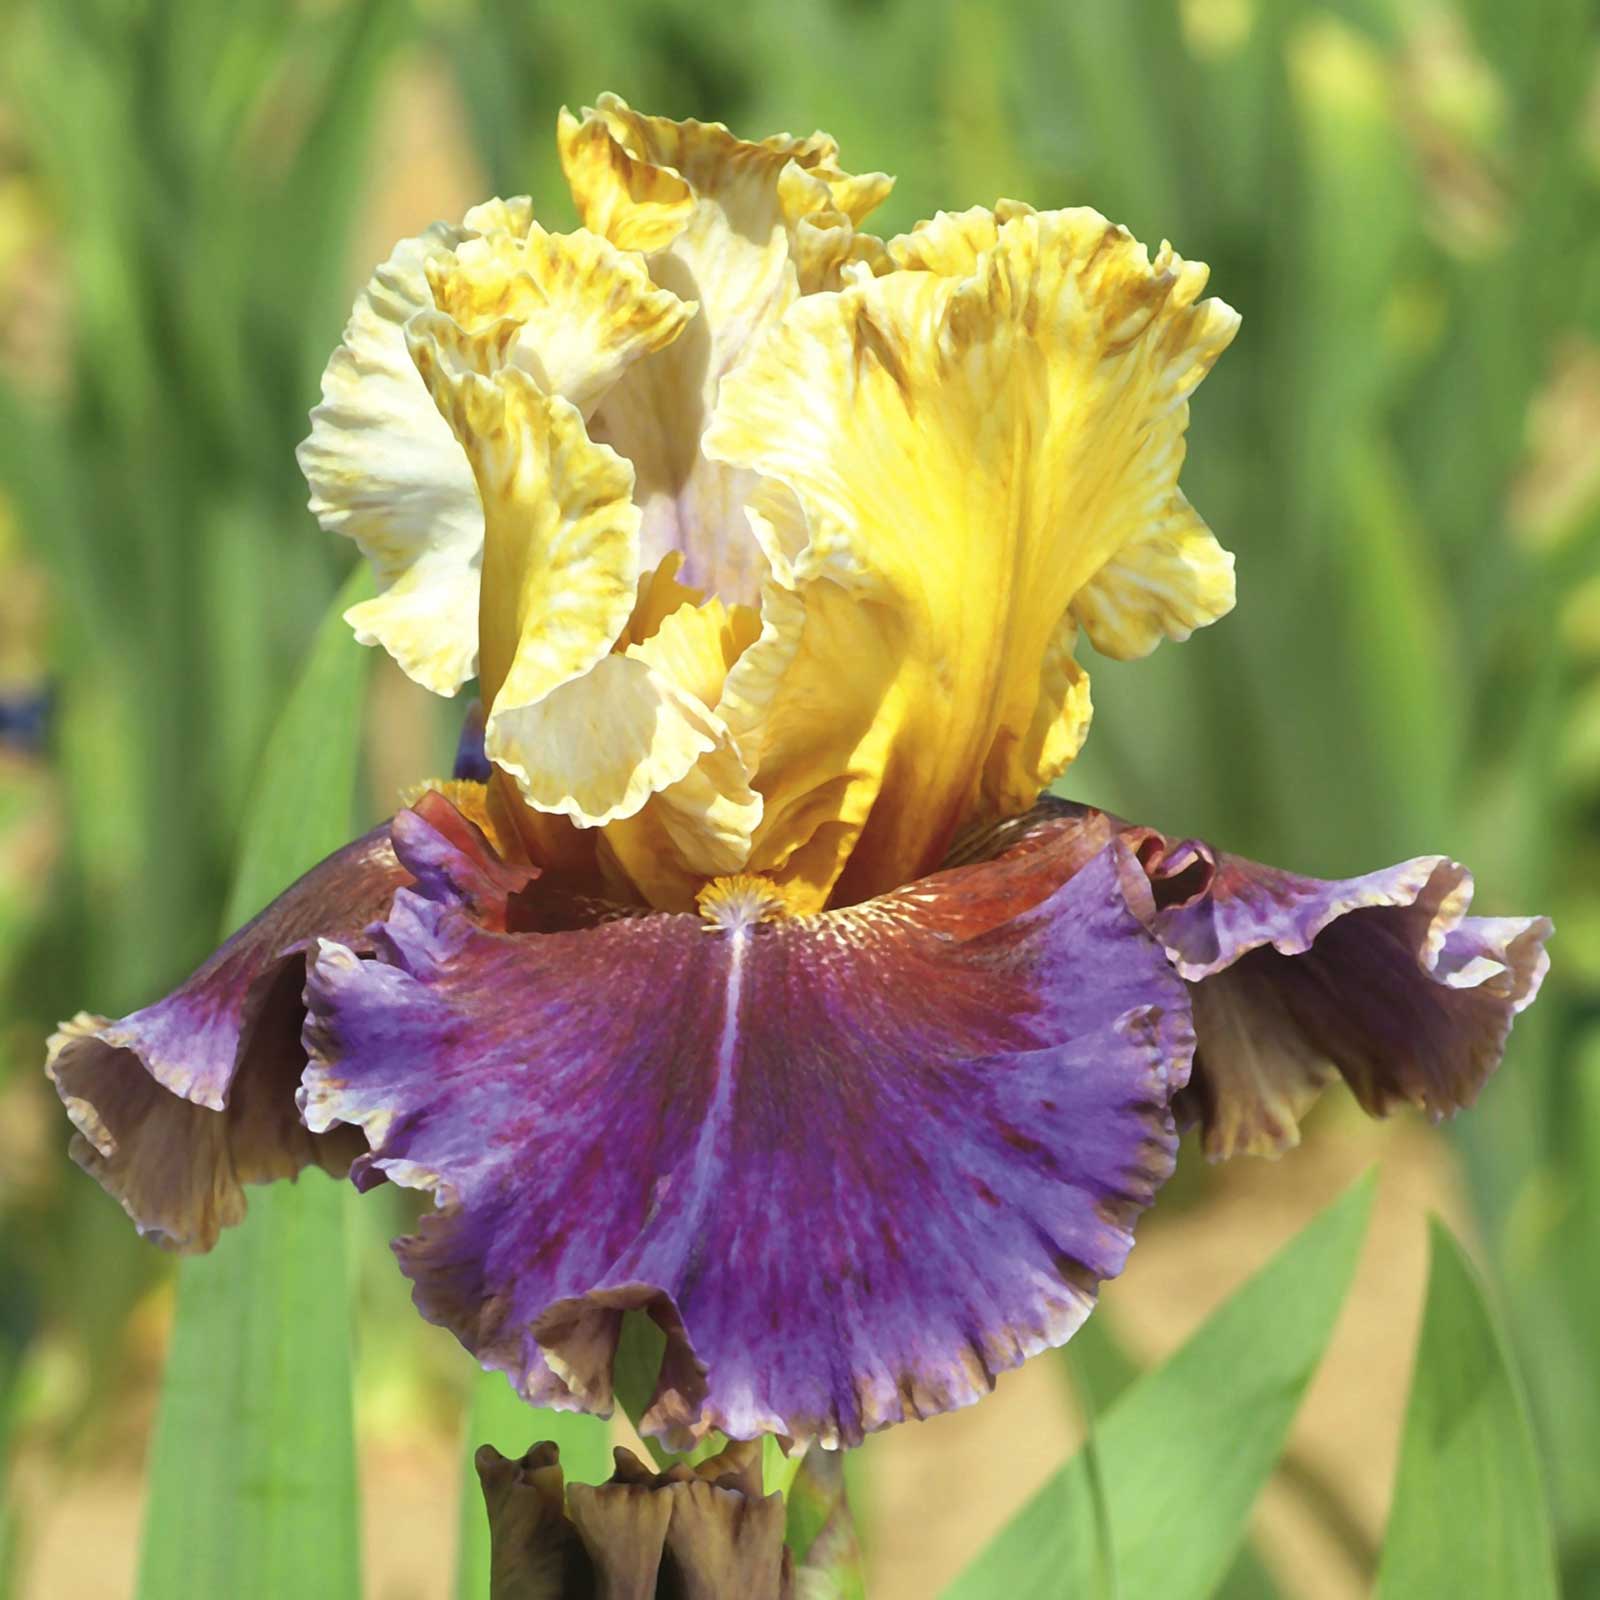 re-blooming bearded iris - final episode